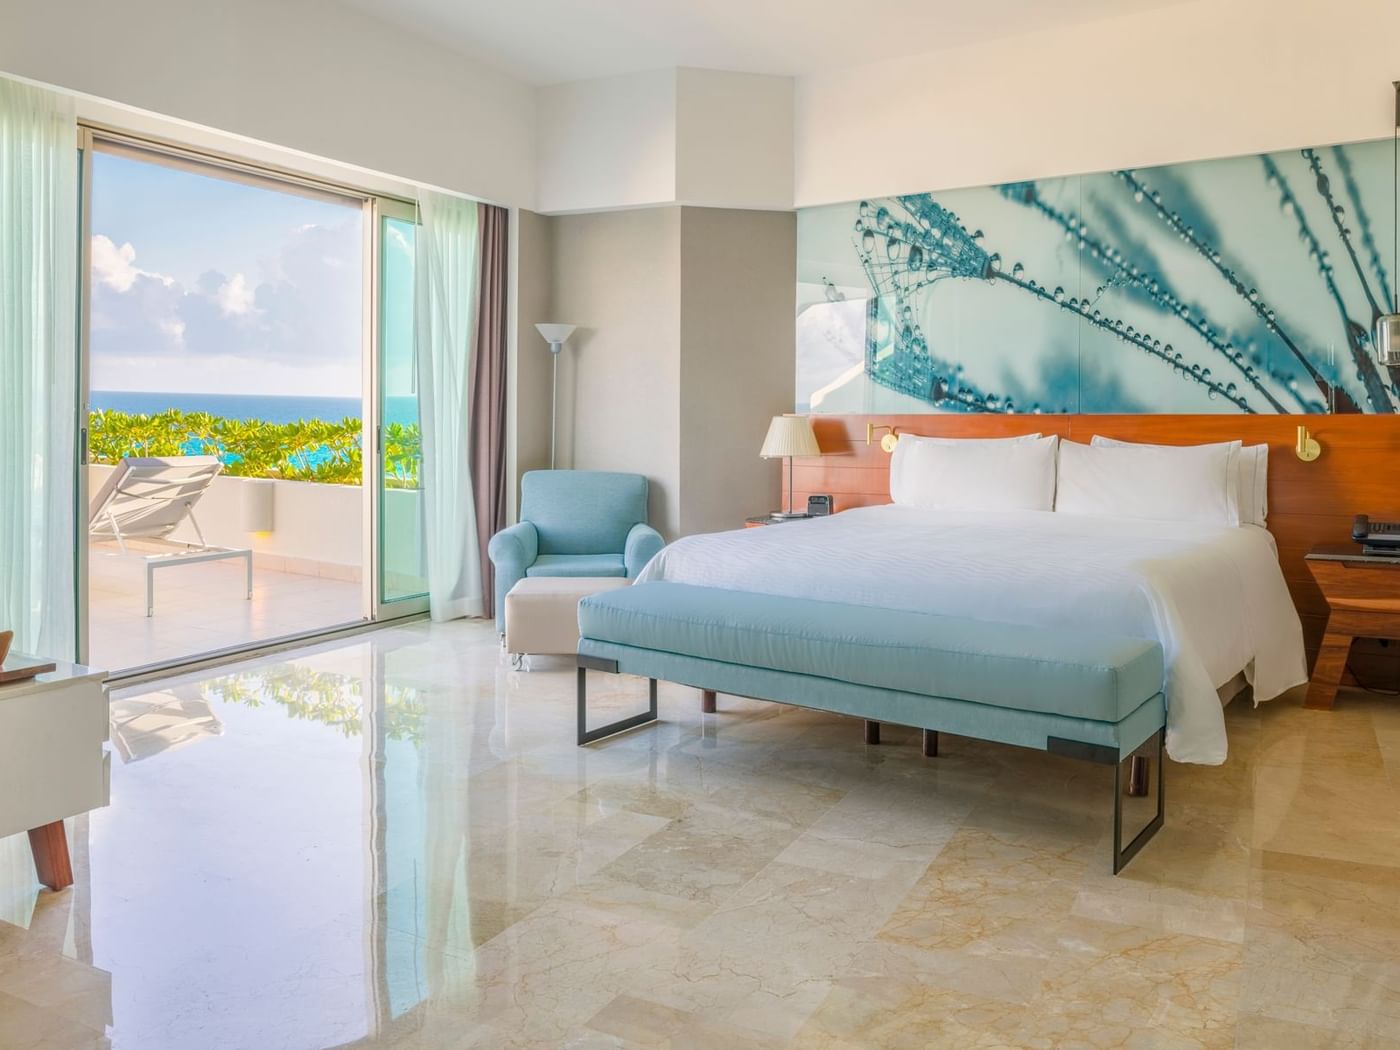 Honeymoon Suite bedroom with balcony area at Live Aqua Beach Resort Cancun